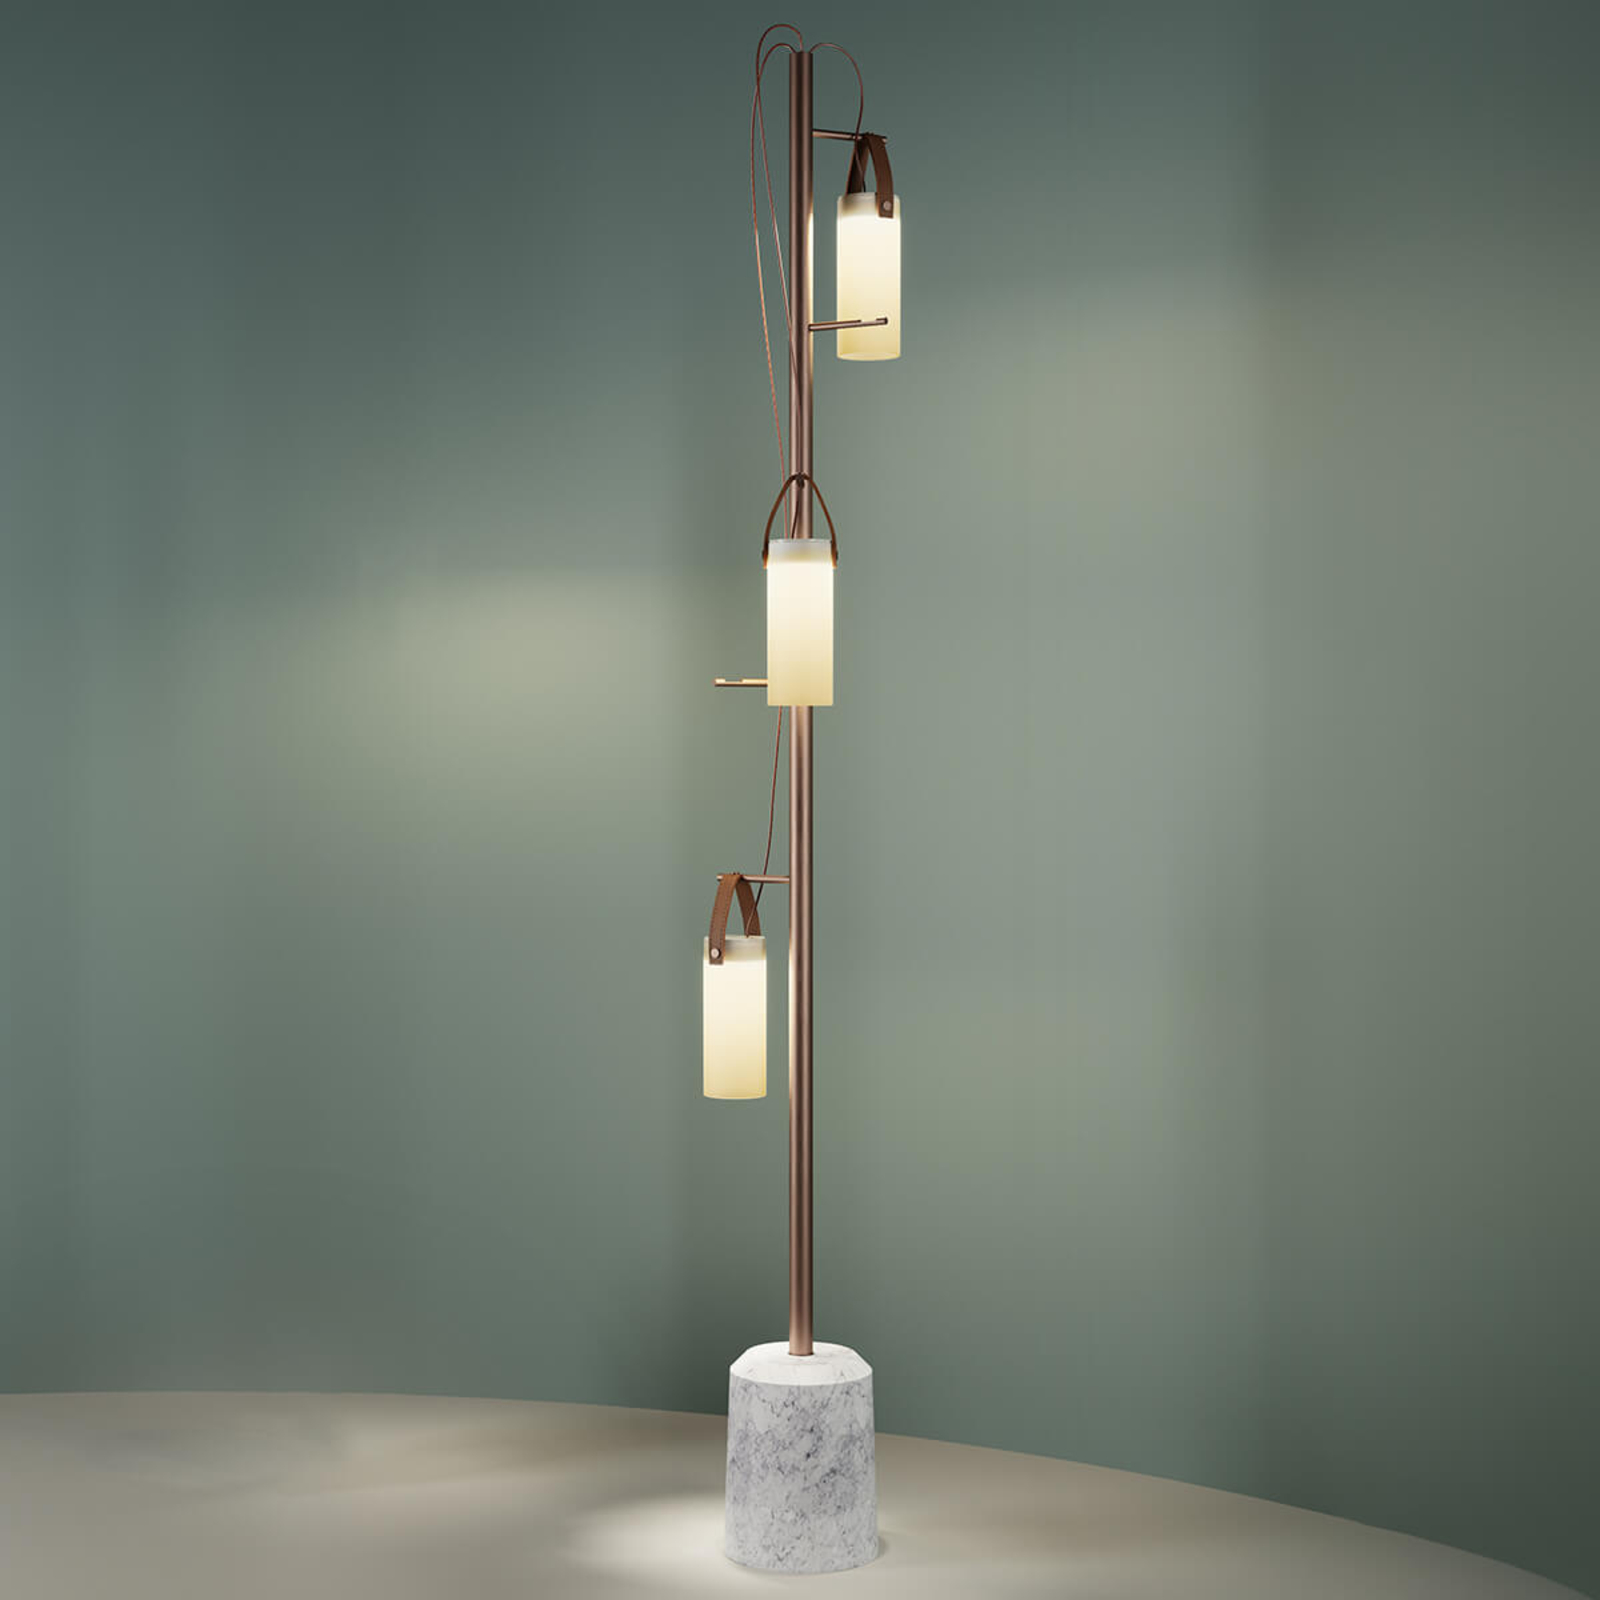 heb vertrouwen Schema Spanje LED design vloerlamp Galerie met 3 lampen | Lampen24.be